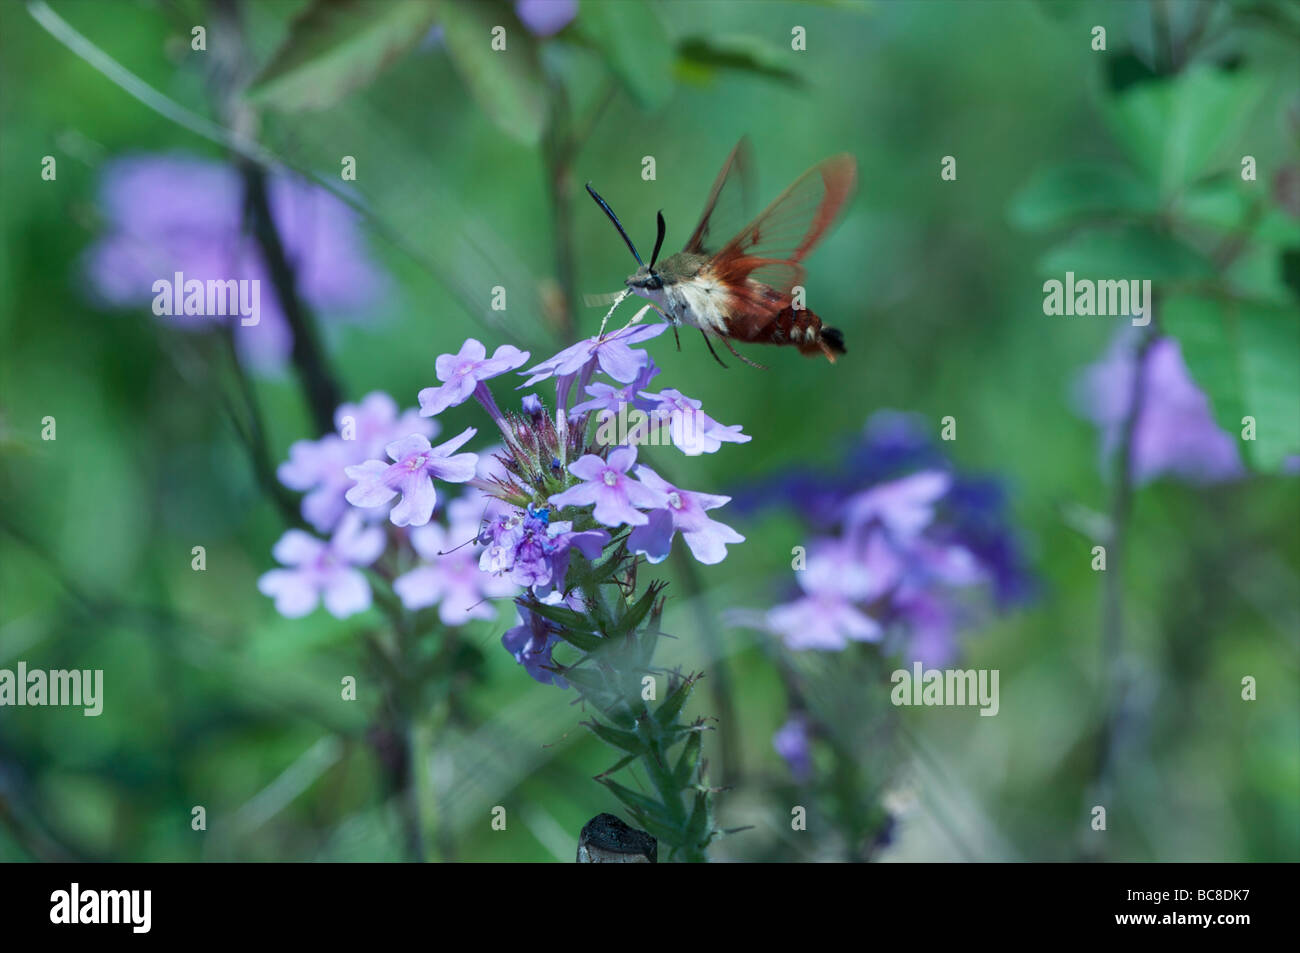 https://c8.alamy.com/comp/BC8DK7/hummingbird-moth-hovering-over-and-feeding-on-phlox-flowers-flat-rock-BC8DK7.jpg